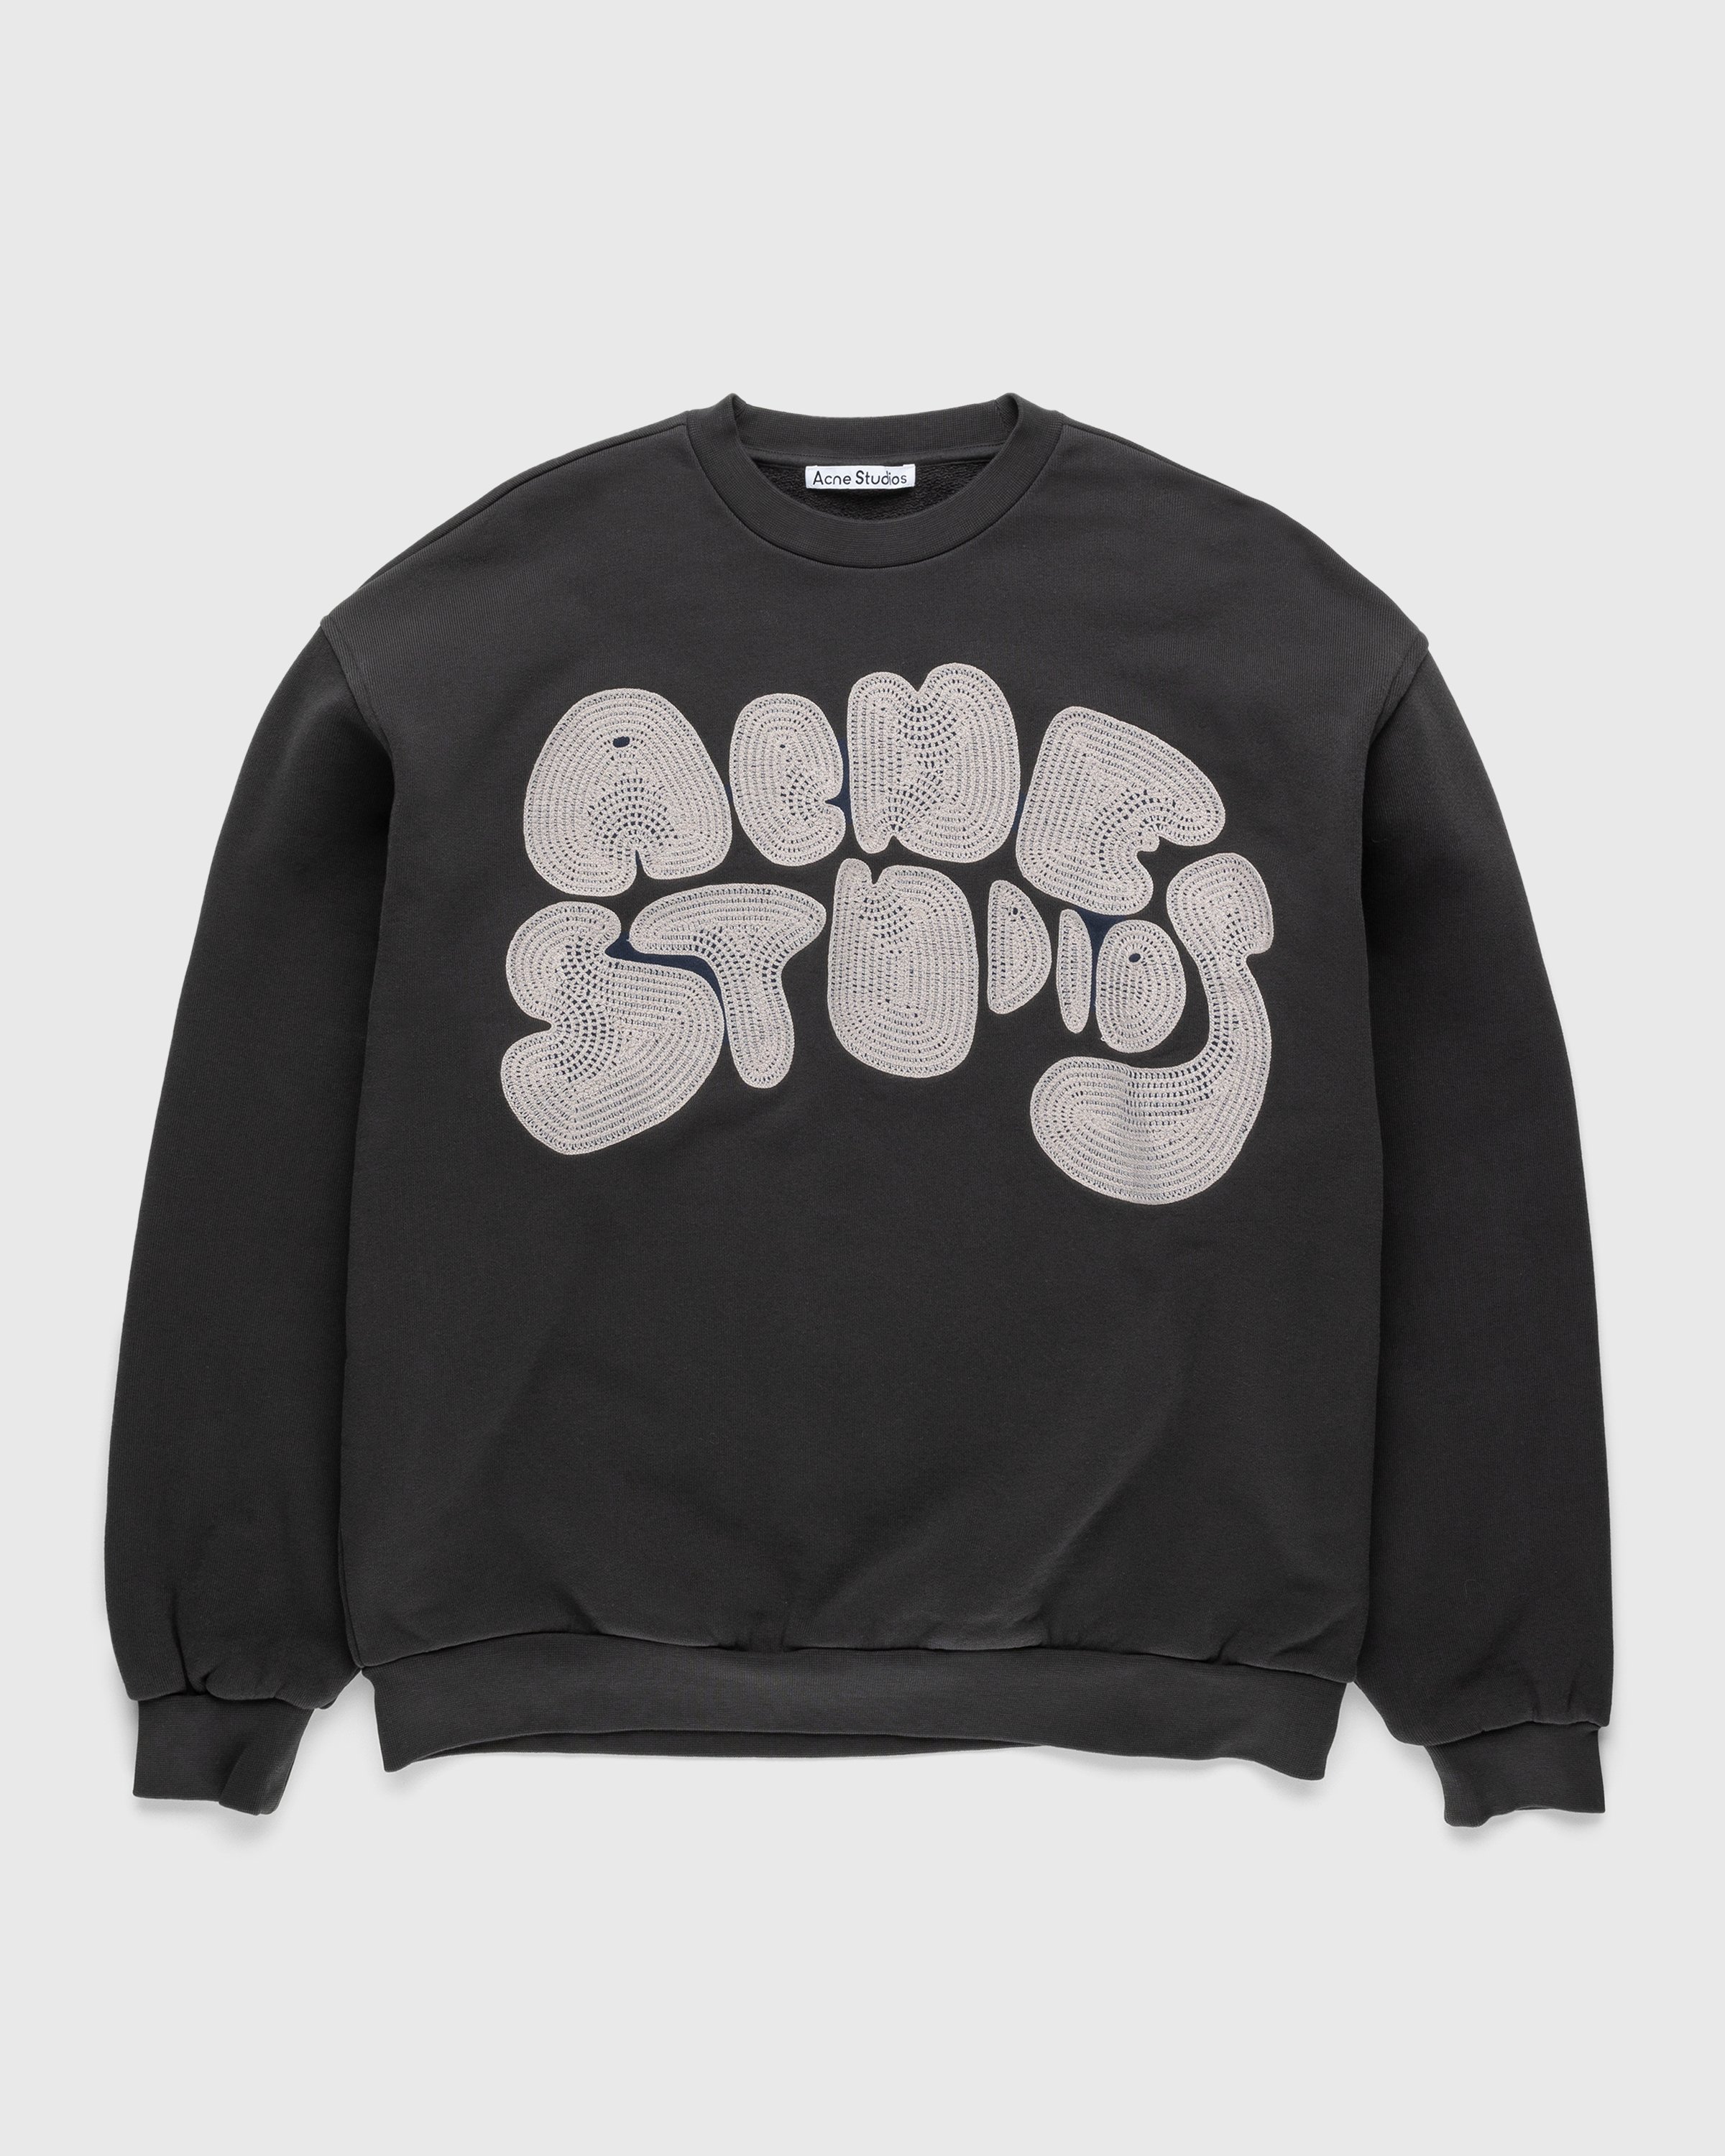 Acne Studios - Bubble Logo Crewneck Sweater Anthracite Grey - Clothing - Black - Image 1